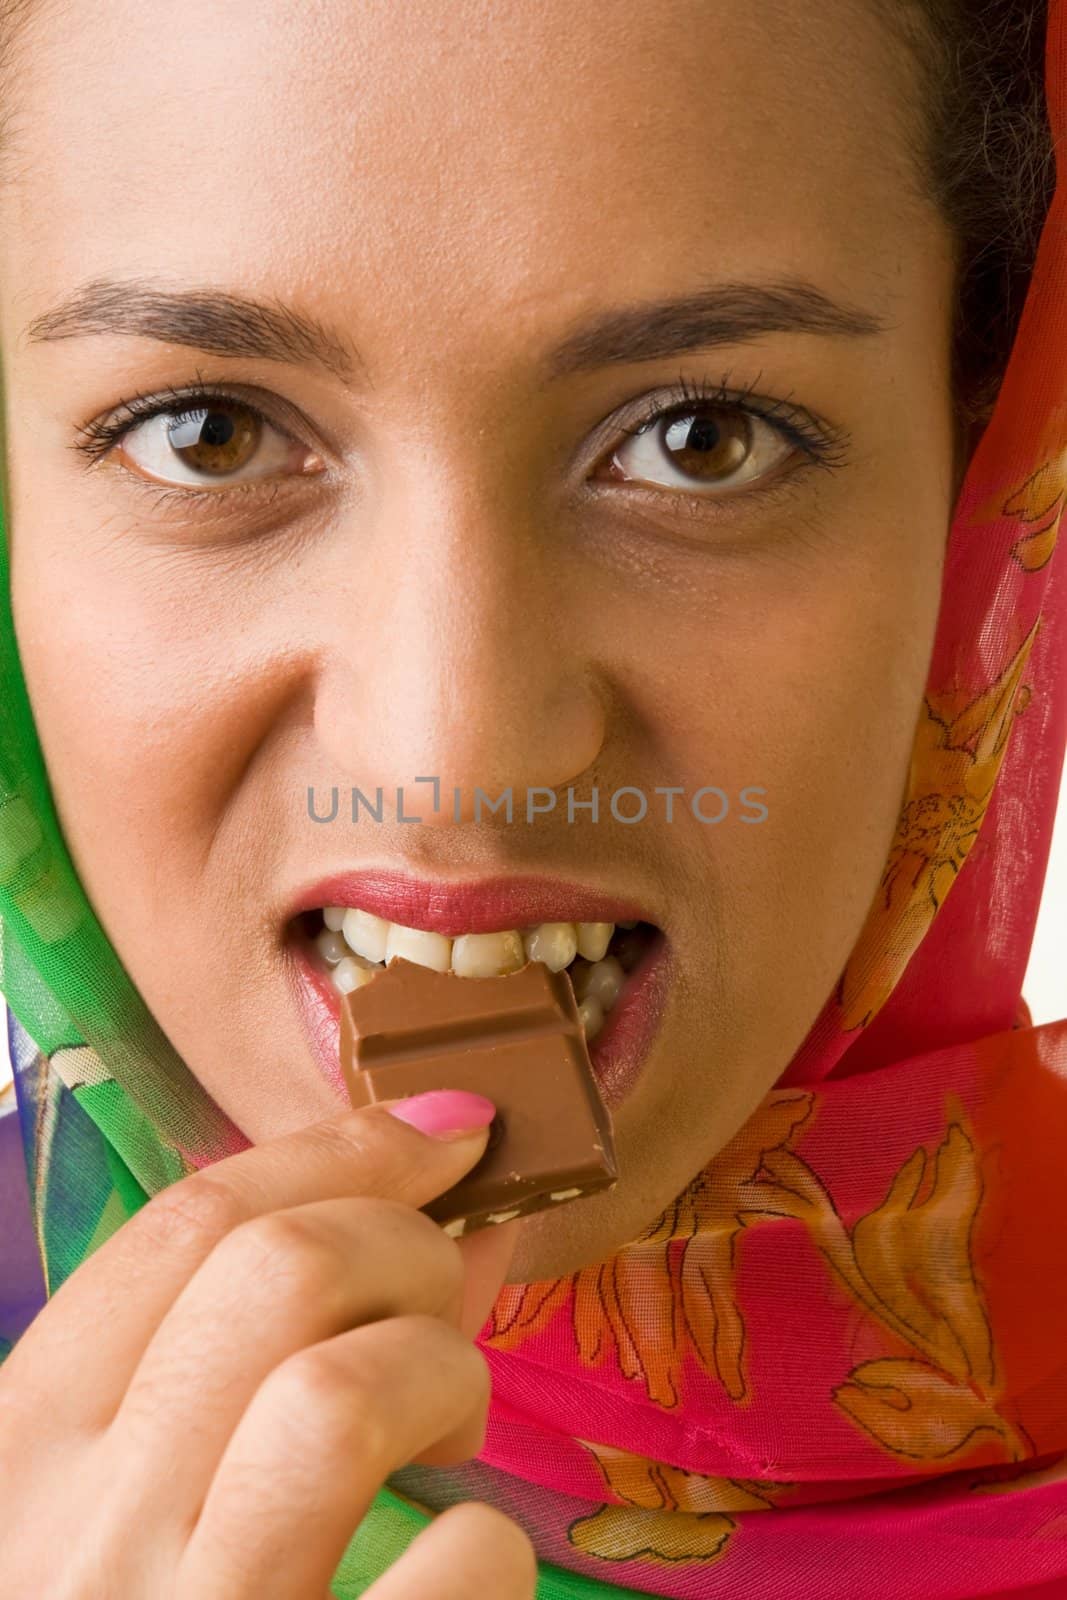 The beautiful woman eats chocolate close up